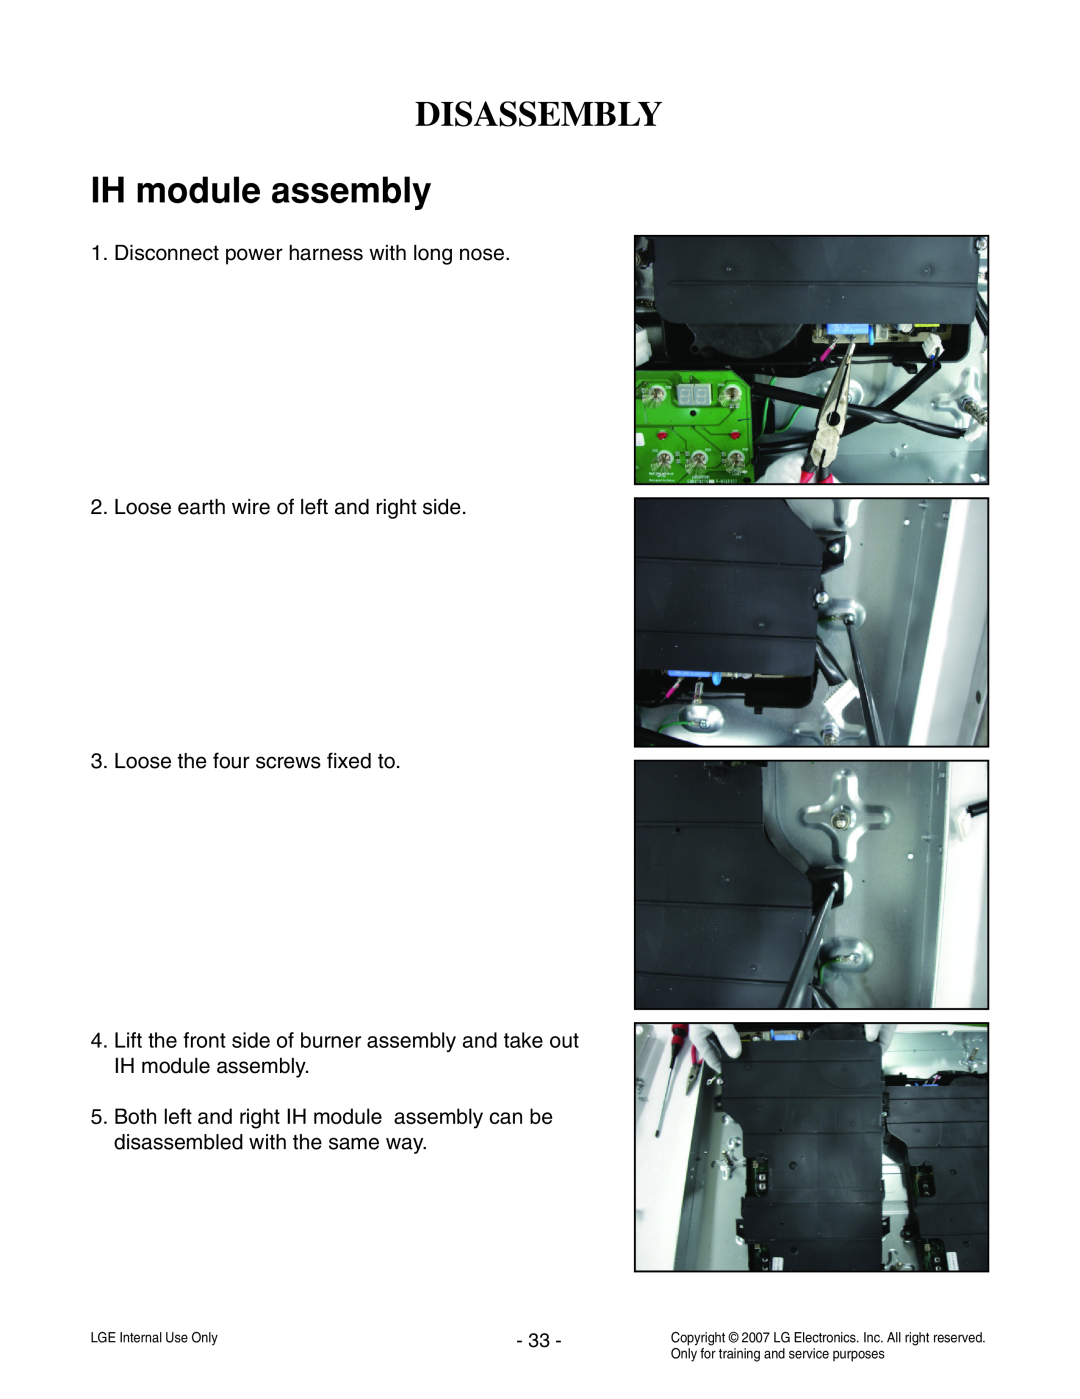 LG Electronics LCE30845 service manual IH module assembly, Disassembly 